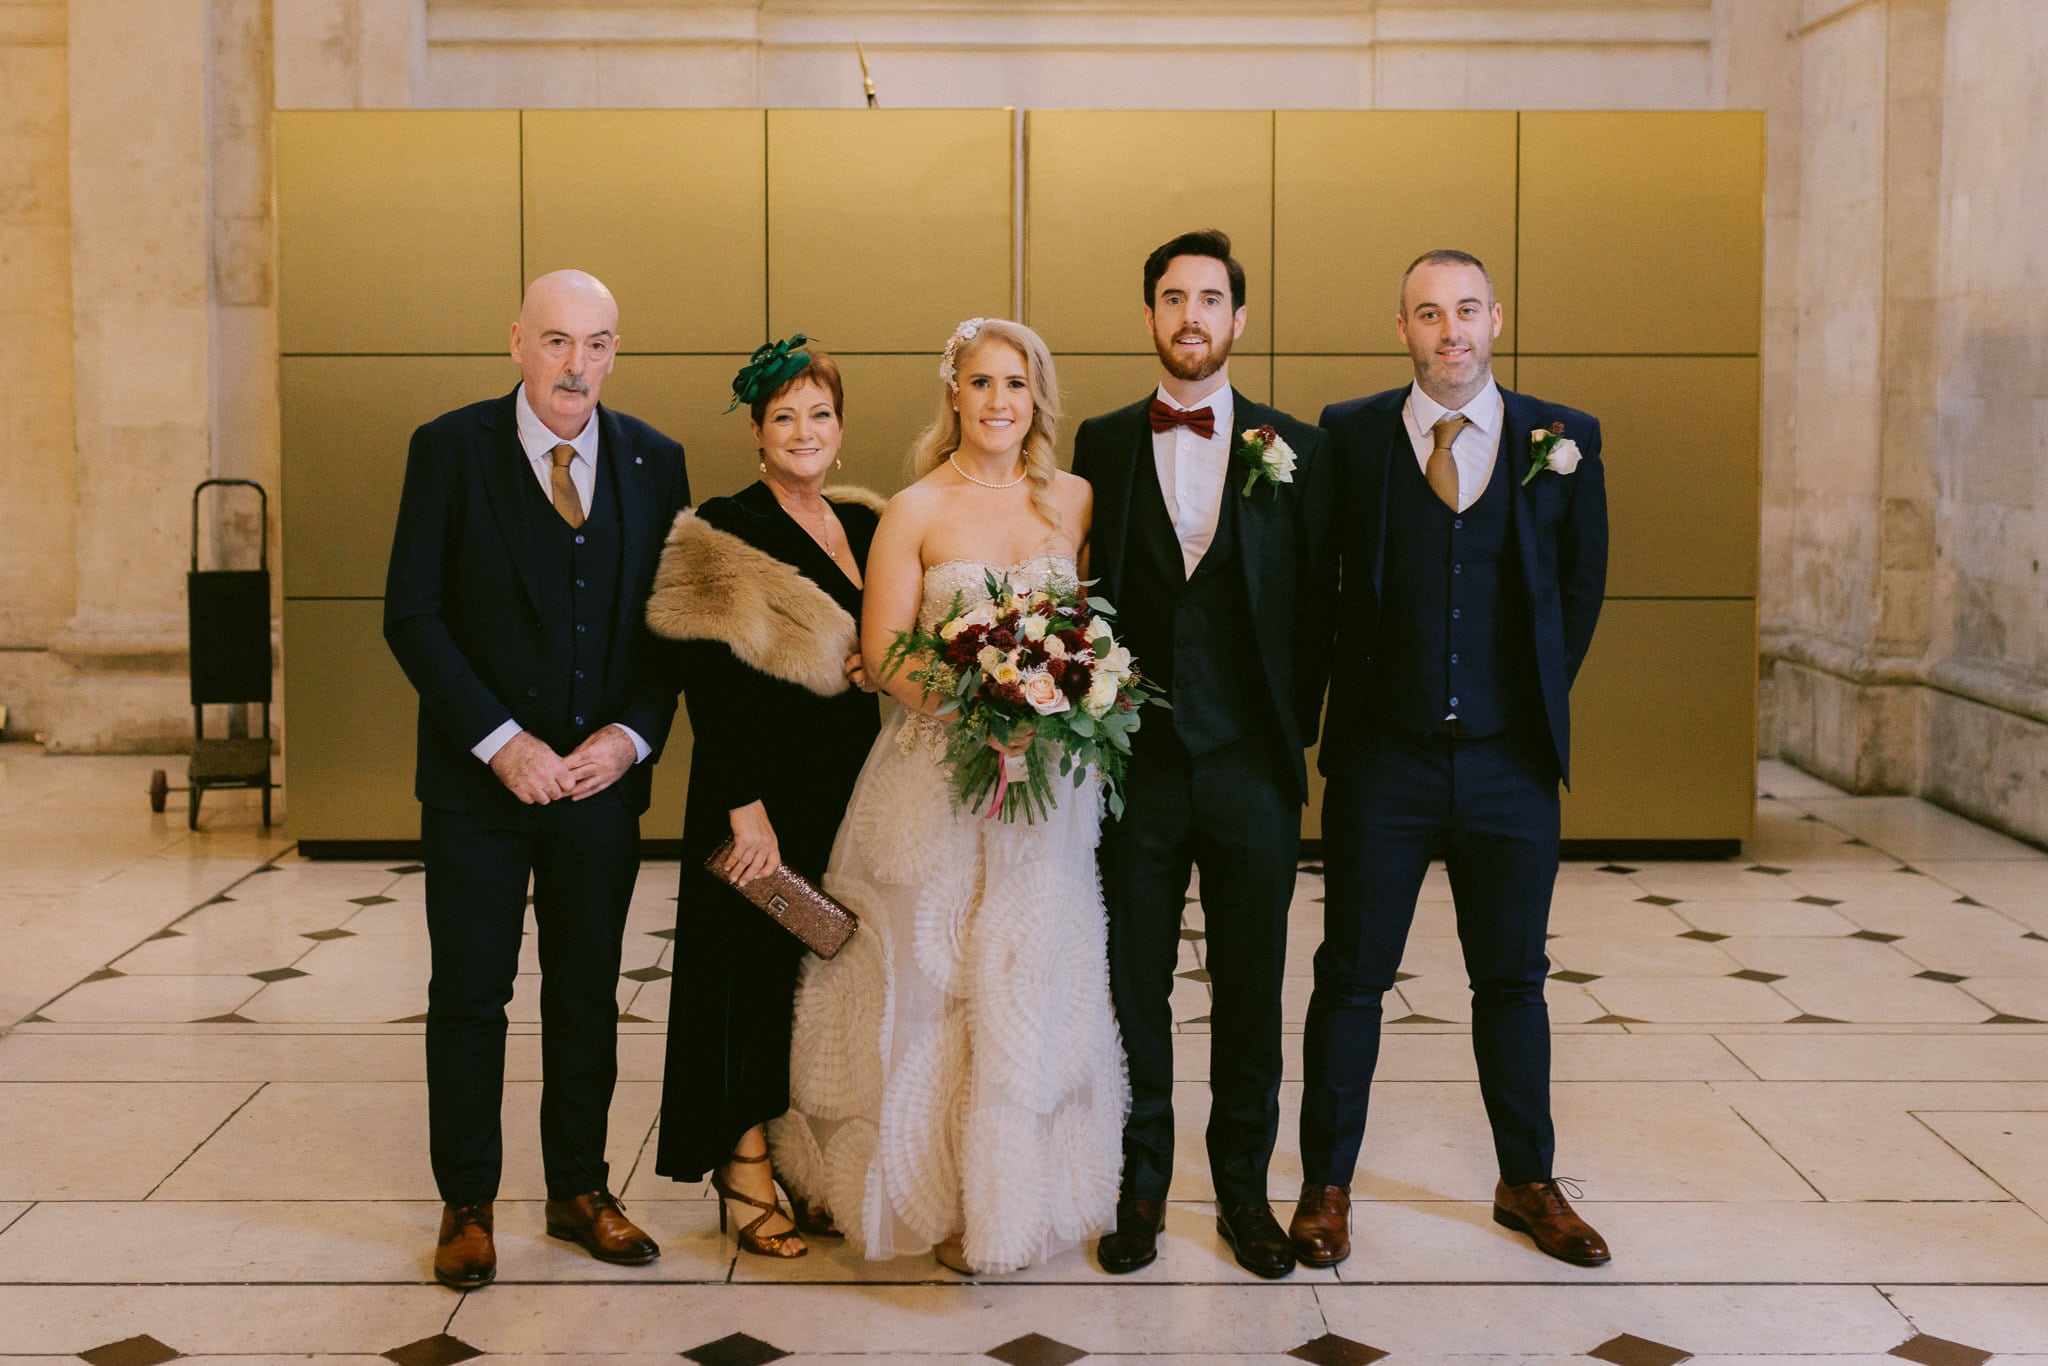 Dublin City Hall Wedding Ceremony Family Photos27